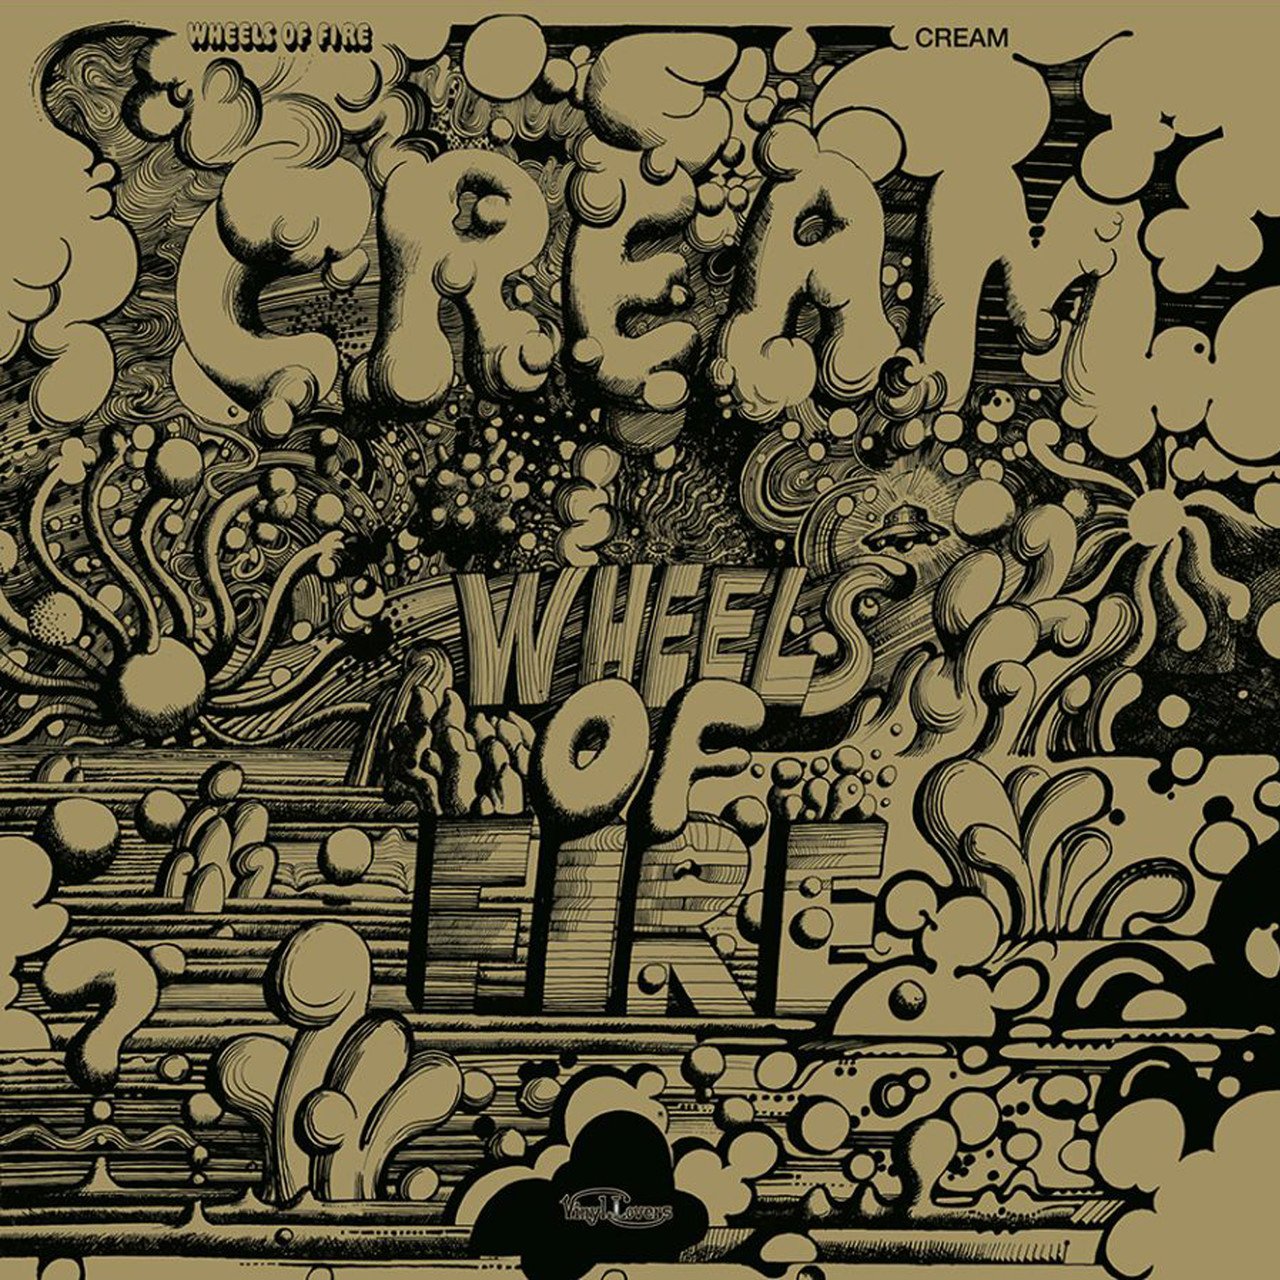 CREAM - WHEELS OF FIRE, Vinyl